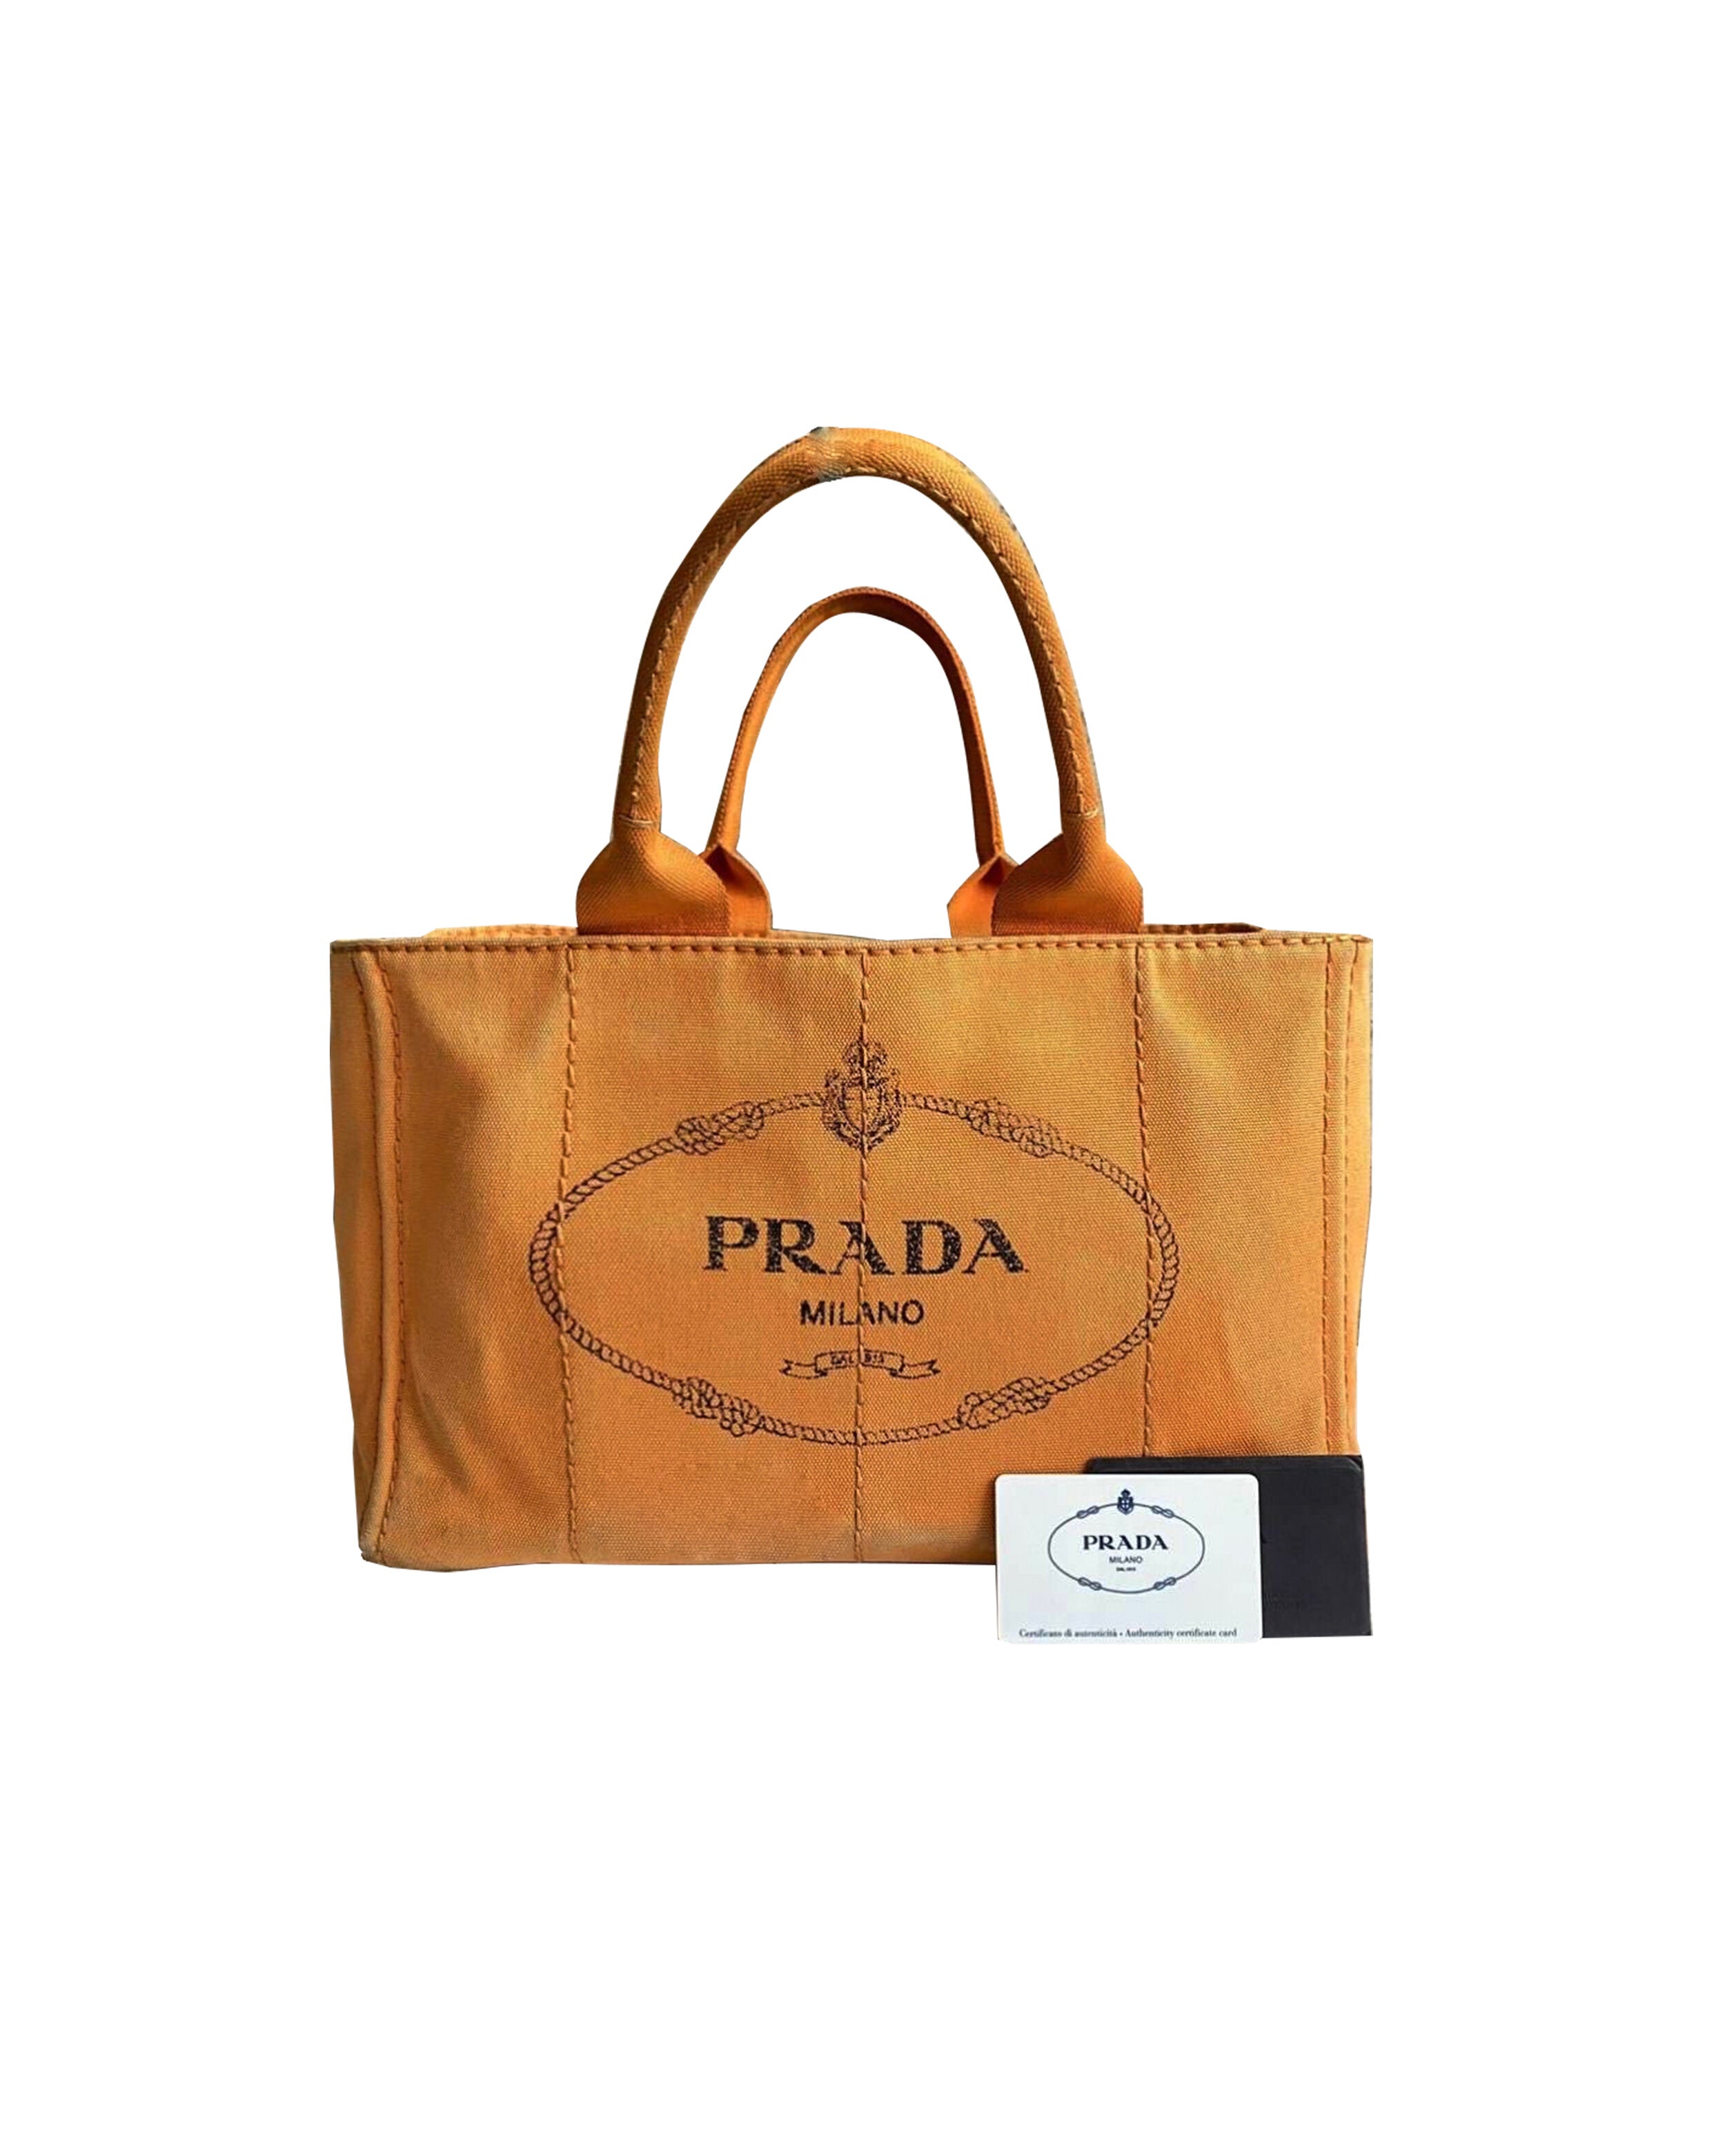 Prada Canapa Tote Bag Handbag Denim Women Mini S size with guarantee card